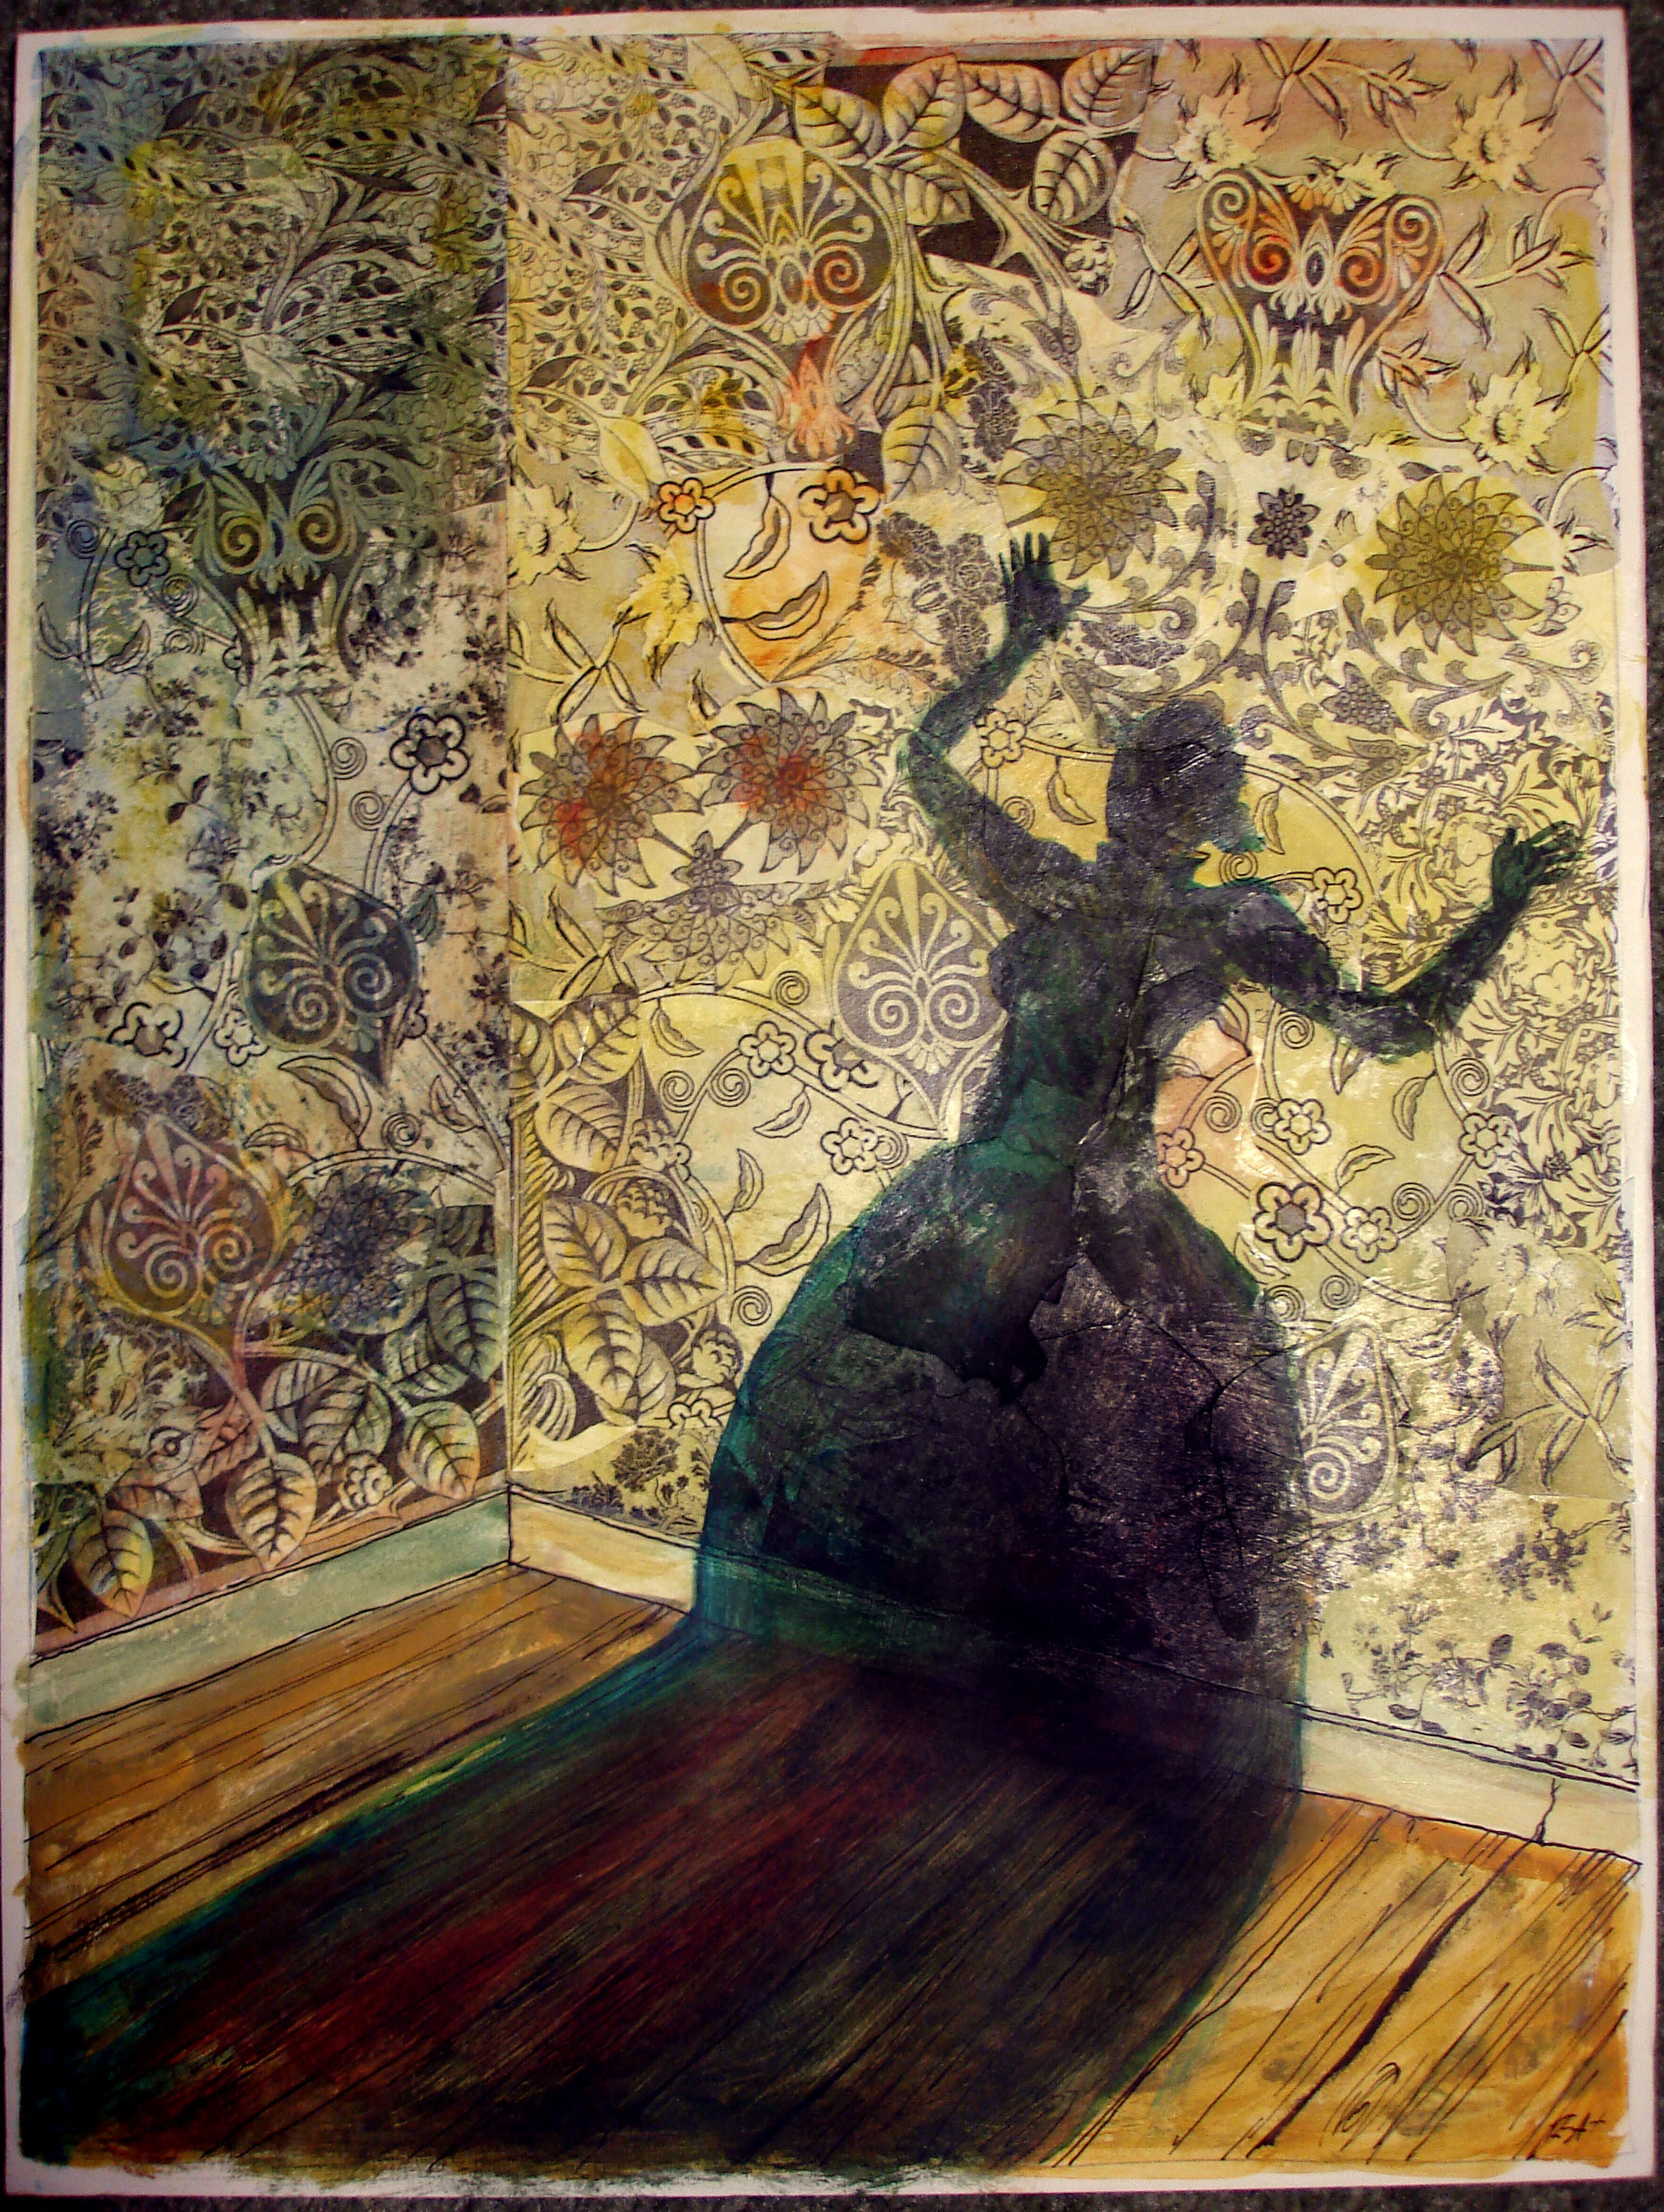 Реферат: The Yellow Wallpaper By Charlotte Perkins Gilman